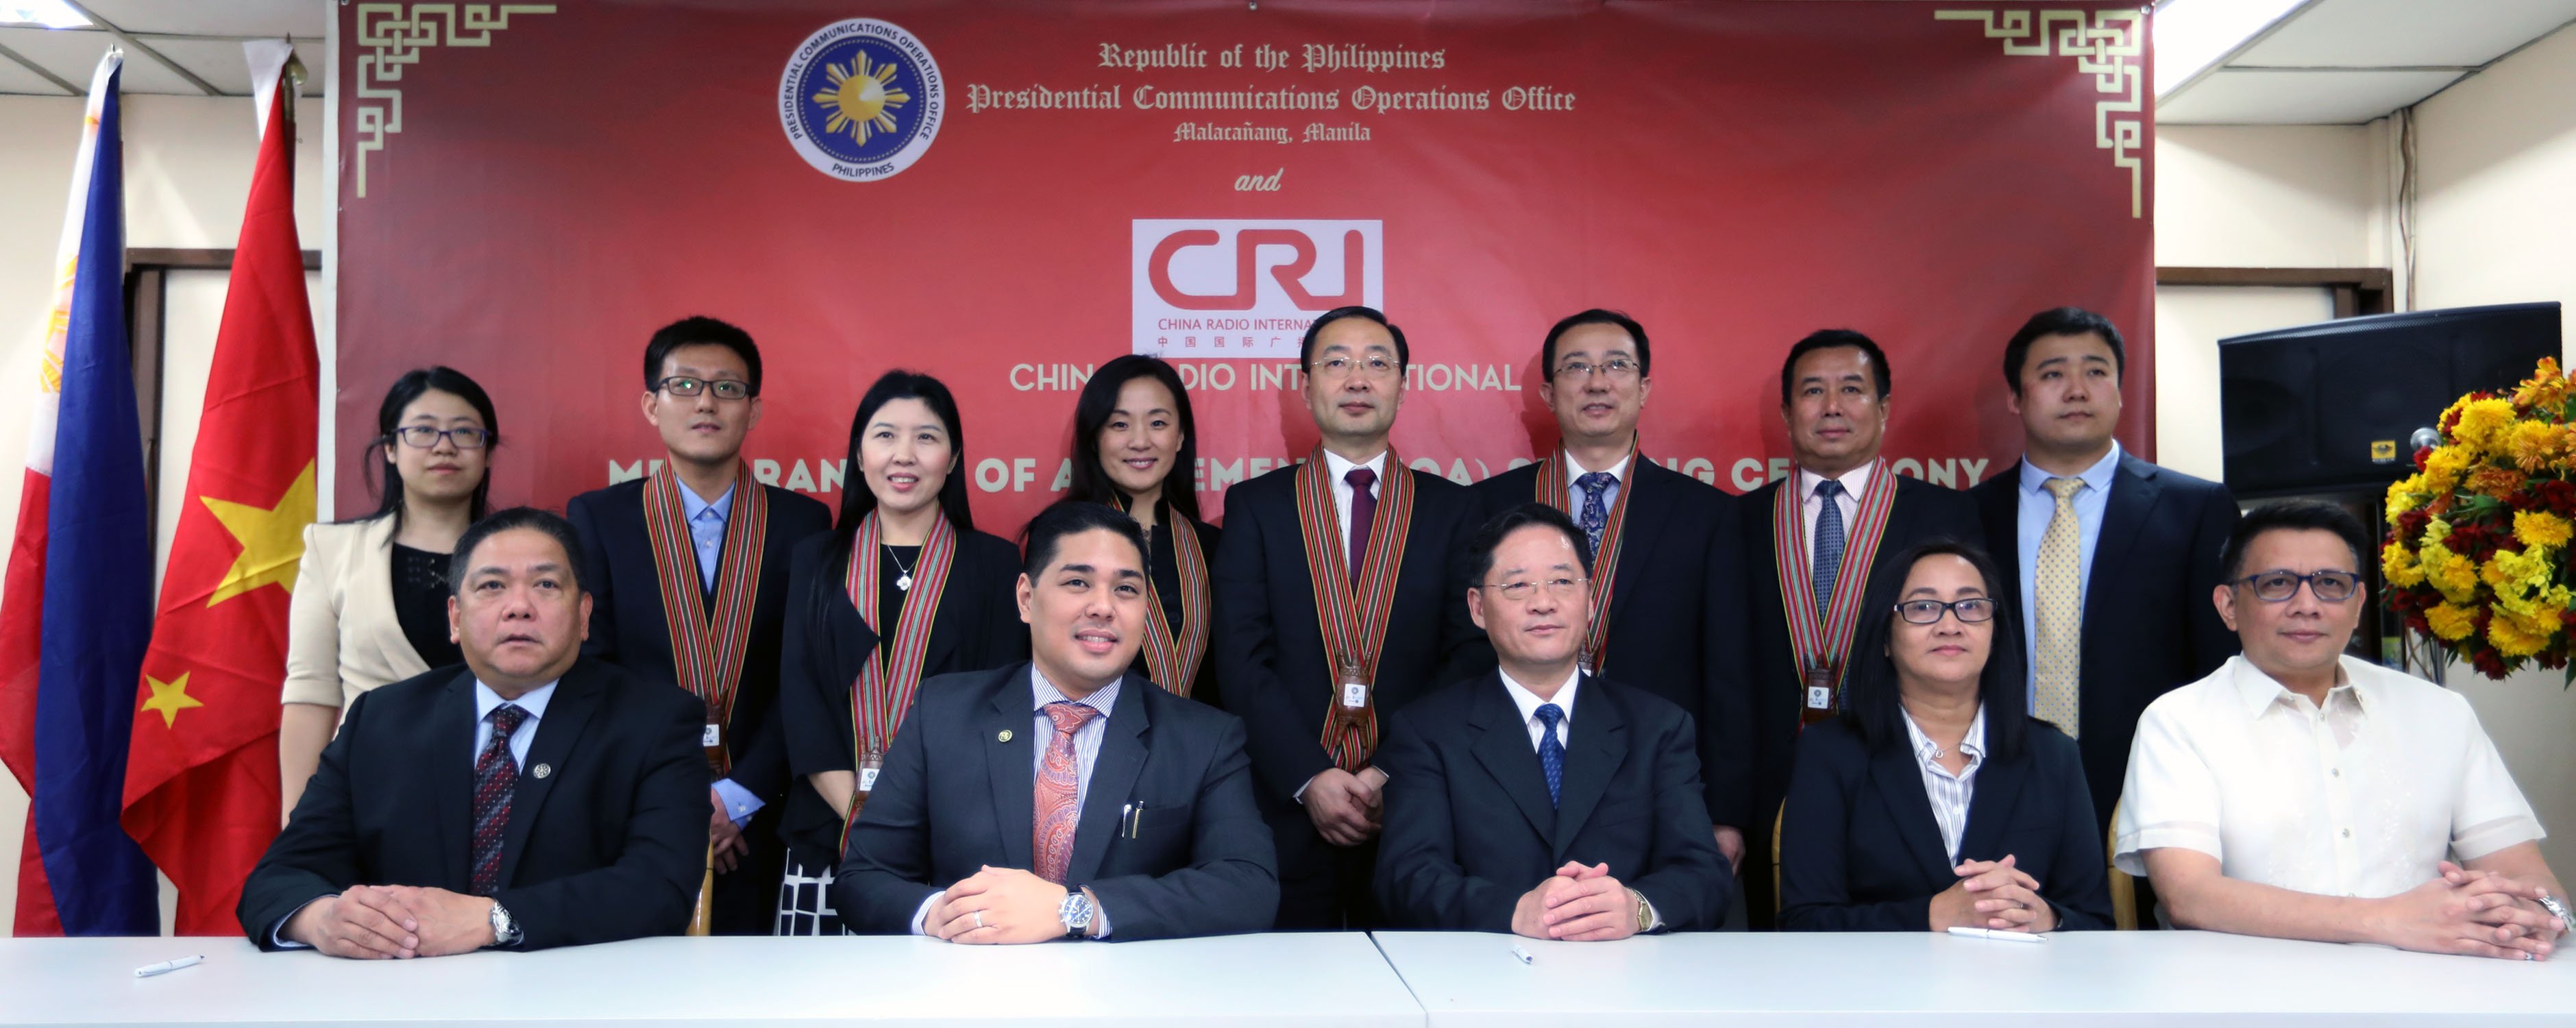 China Radio International (CRI), Philippine Communications Office (PCO) group photo